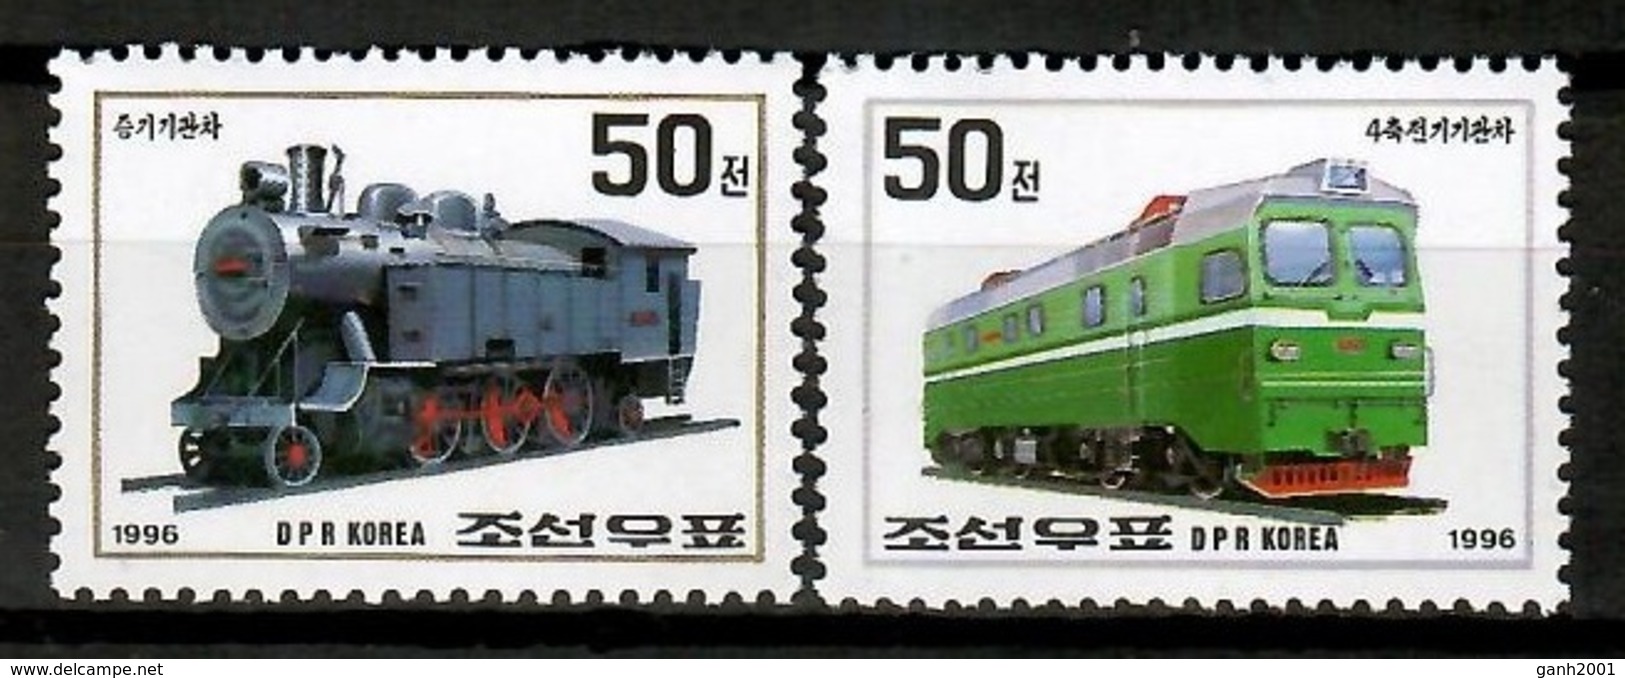 Korea 1996 Corea / Railways Trains MNH Trenes Züge / Cu12715  36-37 - Trenes